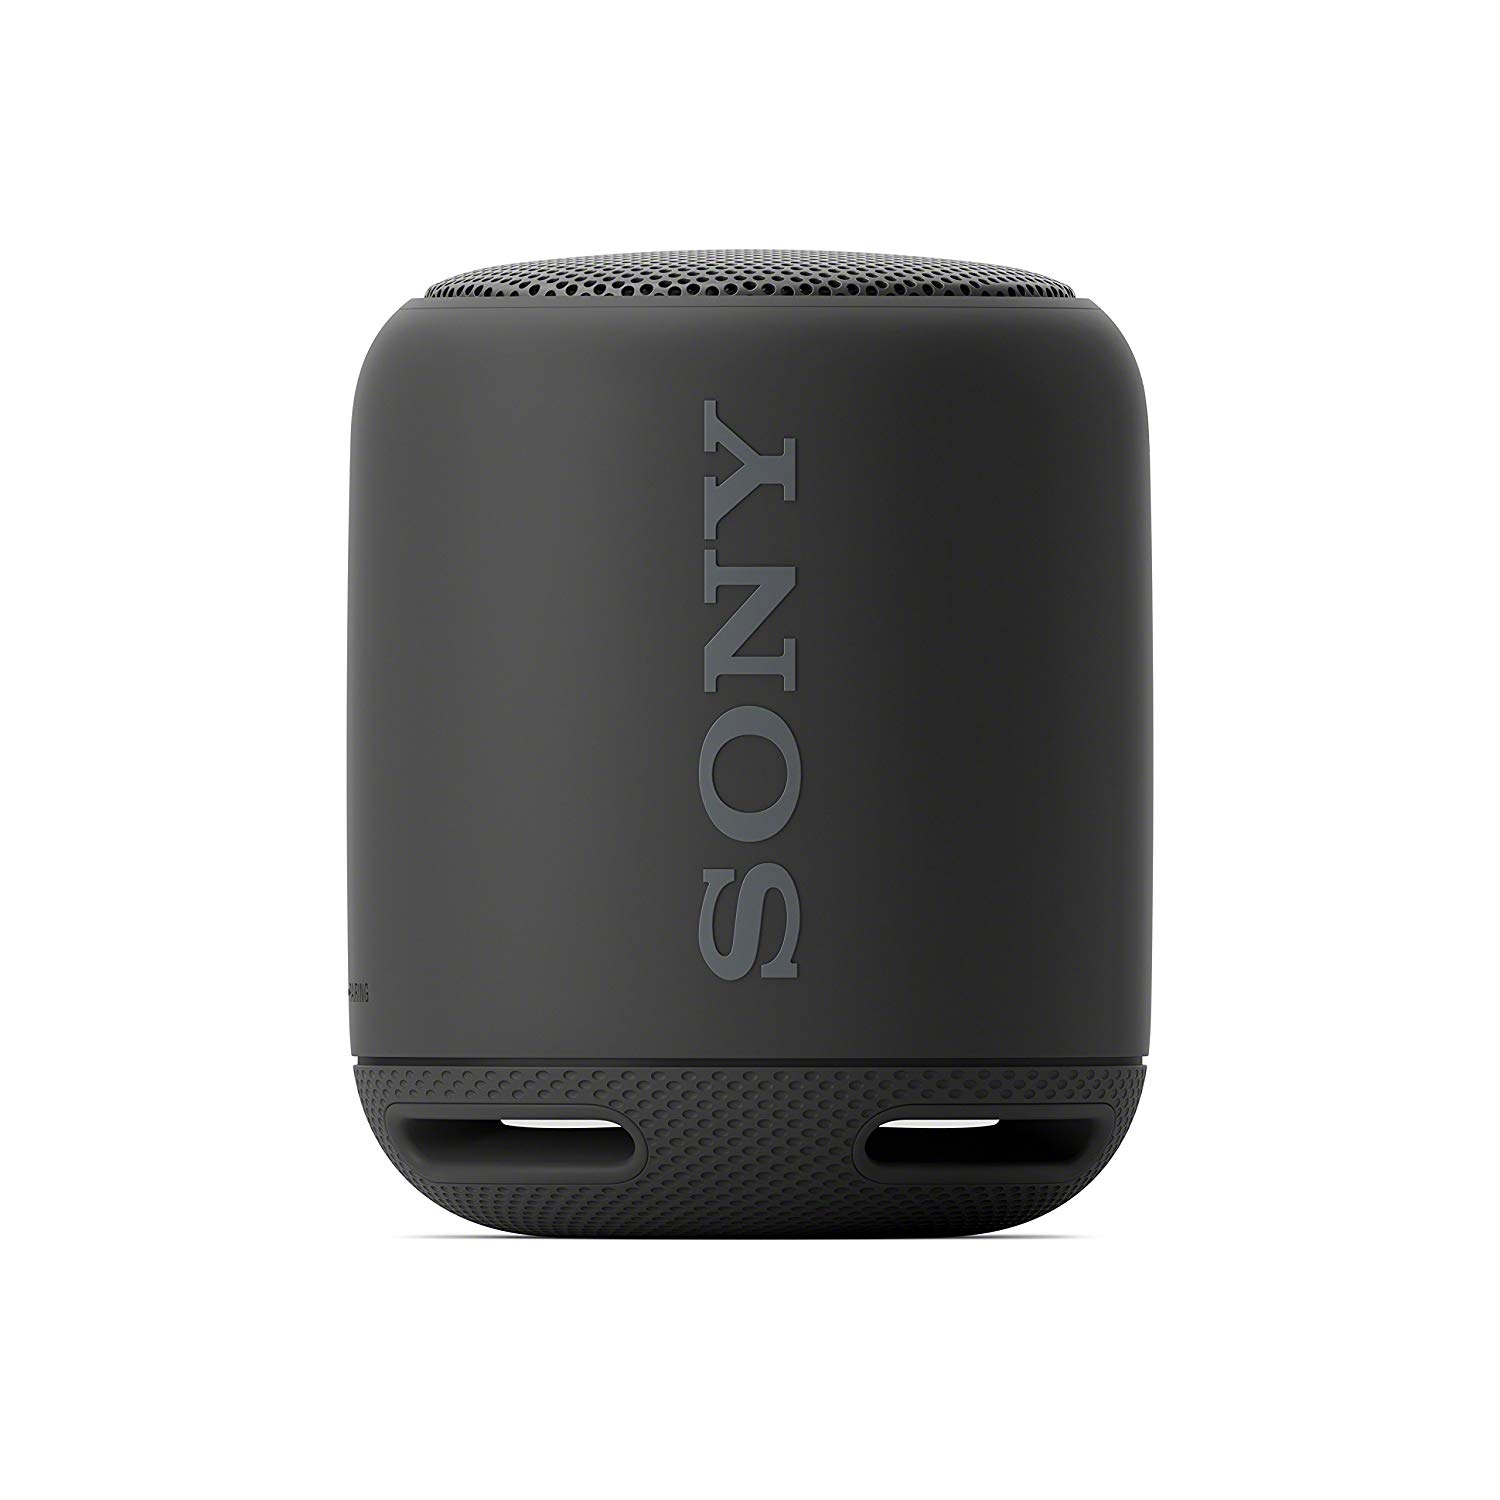 Sony XB10 Altavoz inalámbrico portátil con Bluetooth, Negro